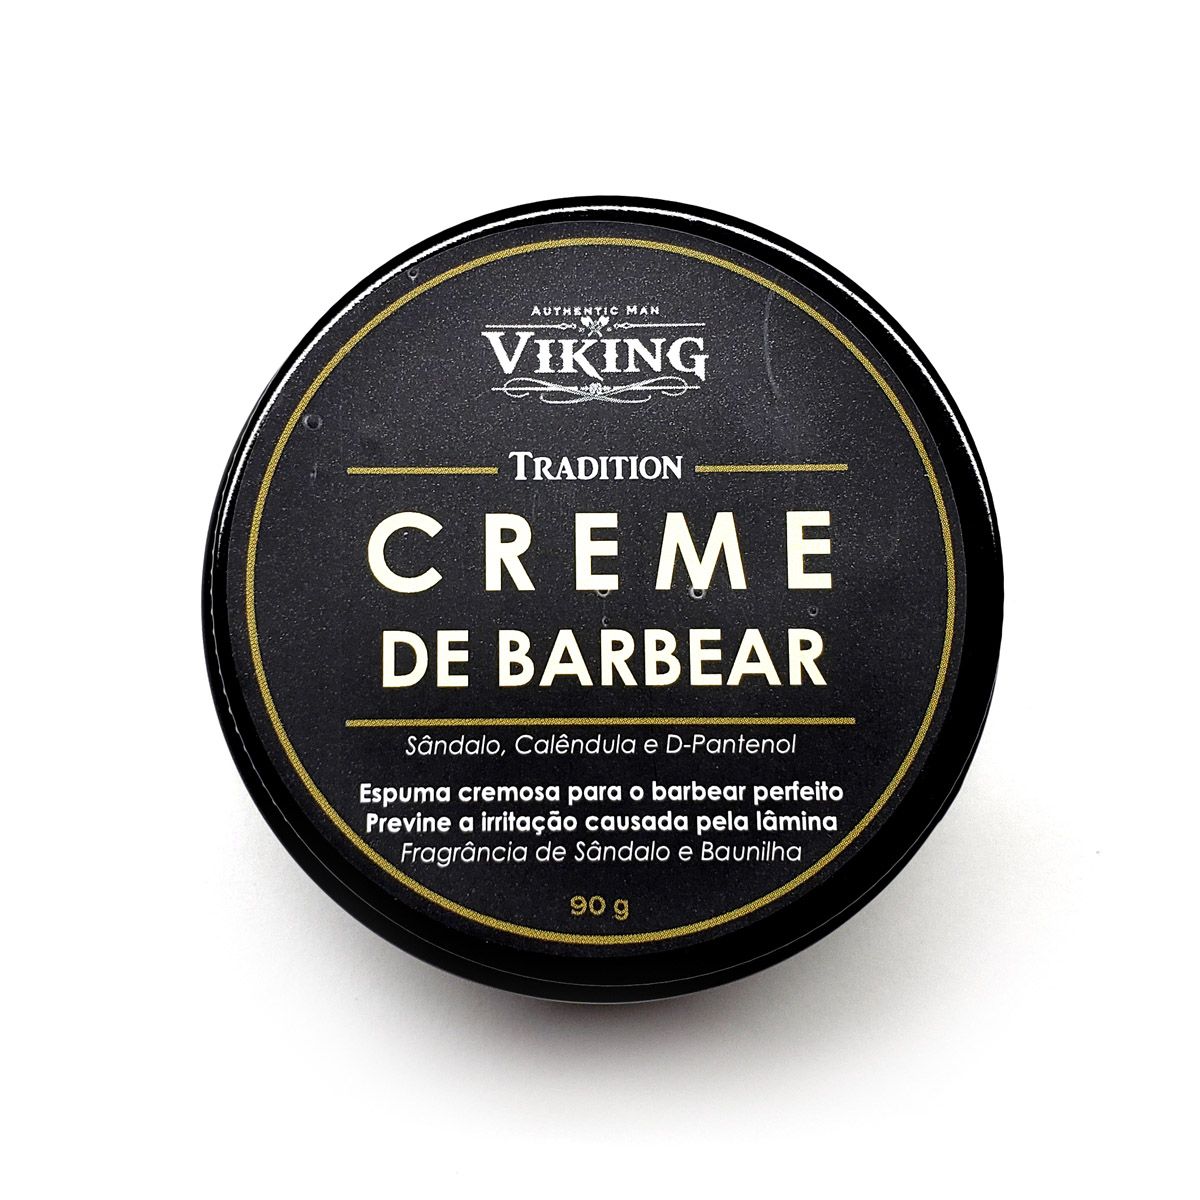 Creme de Barbear - Tradition - Viking  - Viking